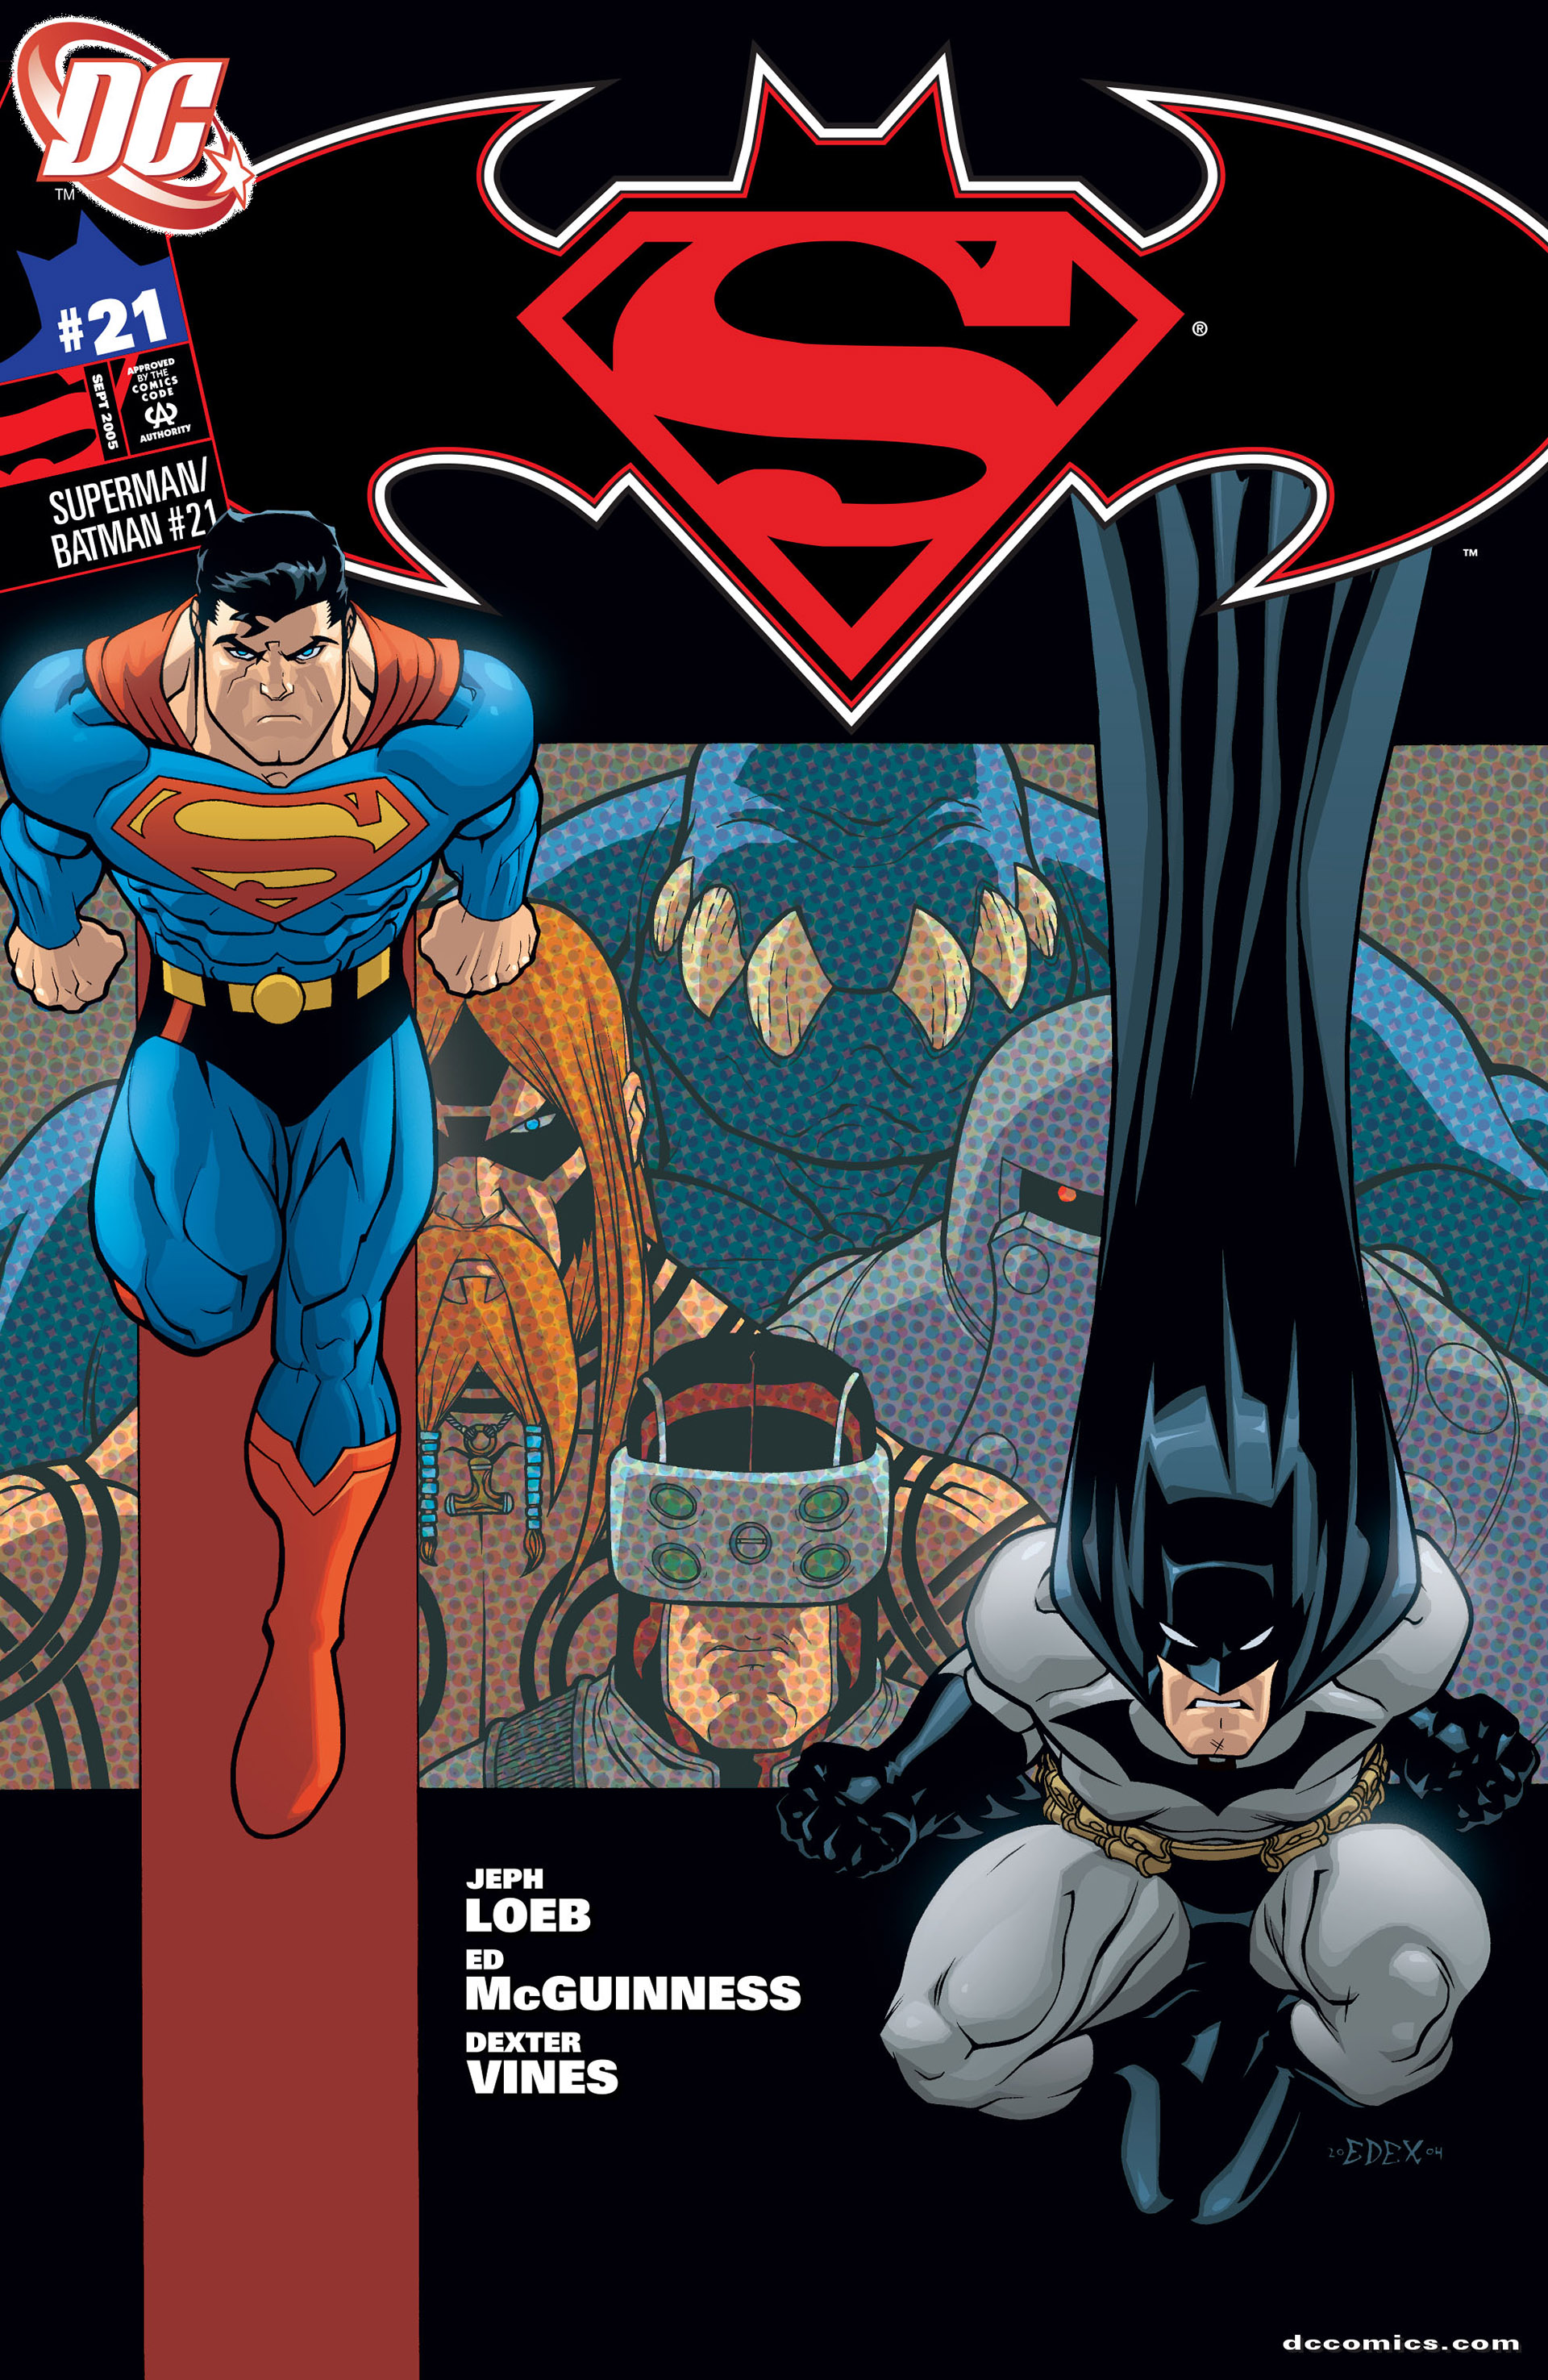 Superman Batman Issue 21 | Read Superman Batman Issue 21 comic online in  high quality. Read Full Comic online for free - Read comics online in high  quality .| READ COMIC ONLINE